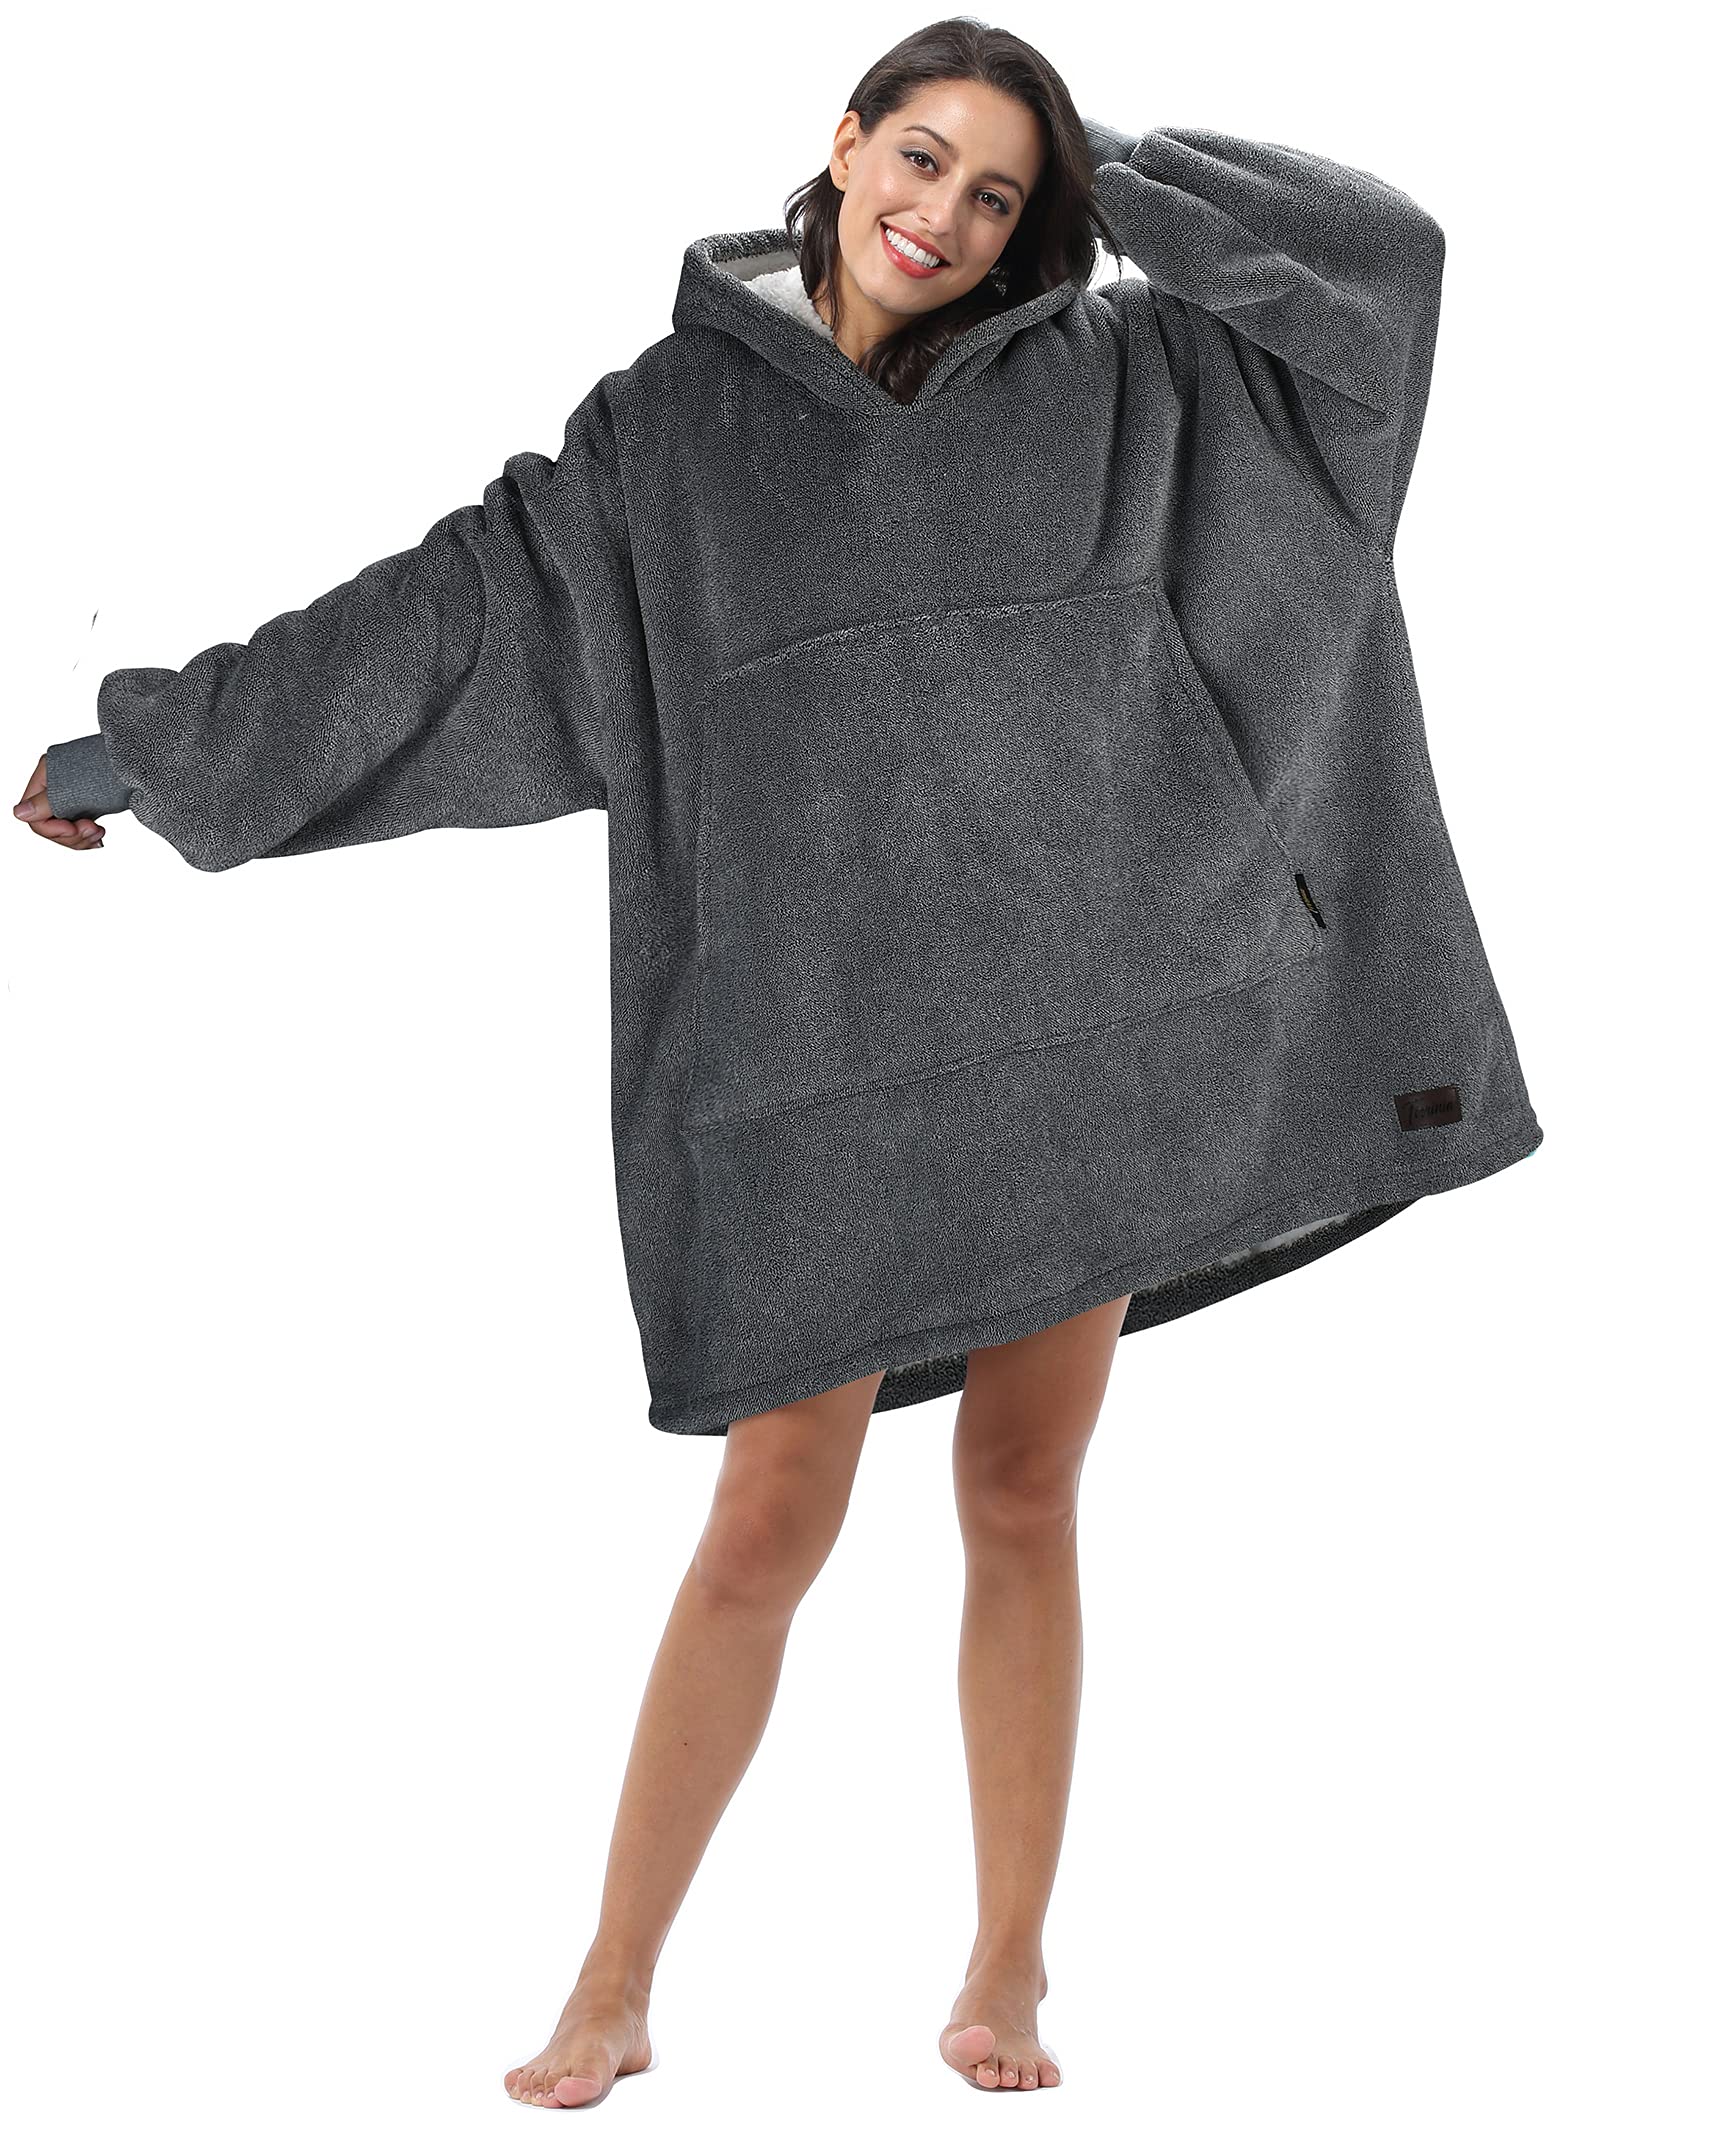 Ash Print Oversized Hoodie Blanket Sweatshirt Comfortable Sherpa Giant Wearable Blankets Gift for Adults Men Women Teenagers Wife Girlfriend Black